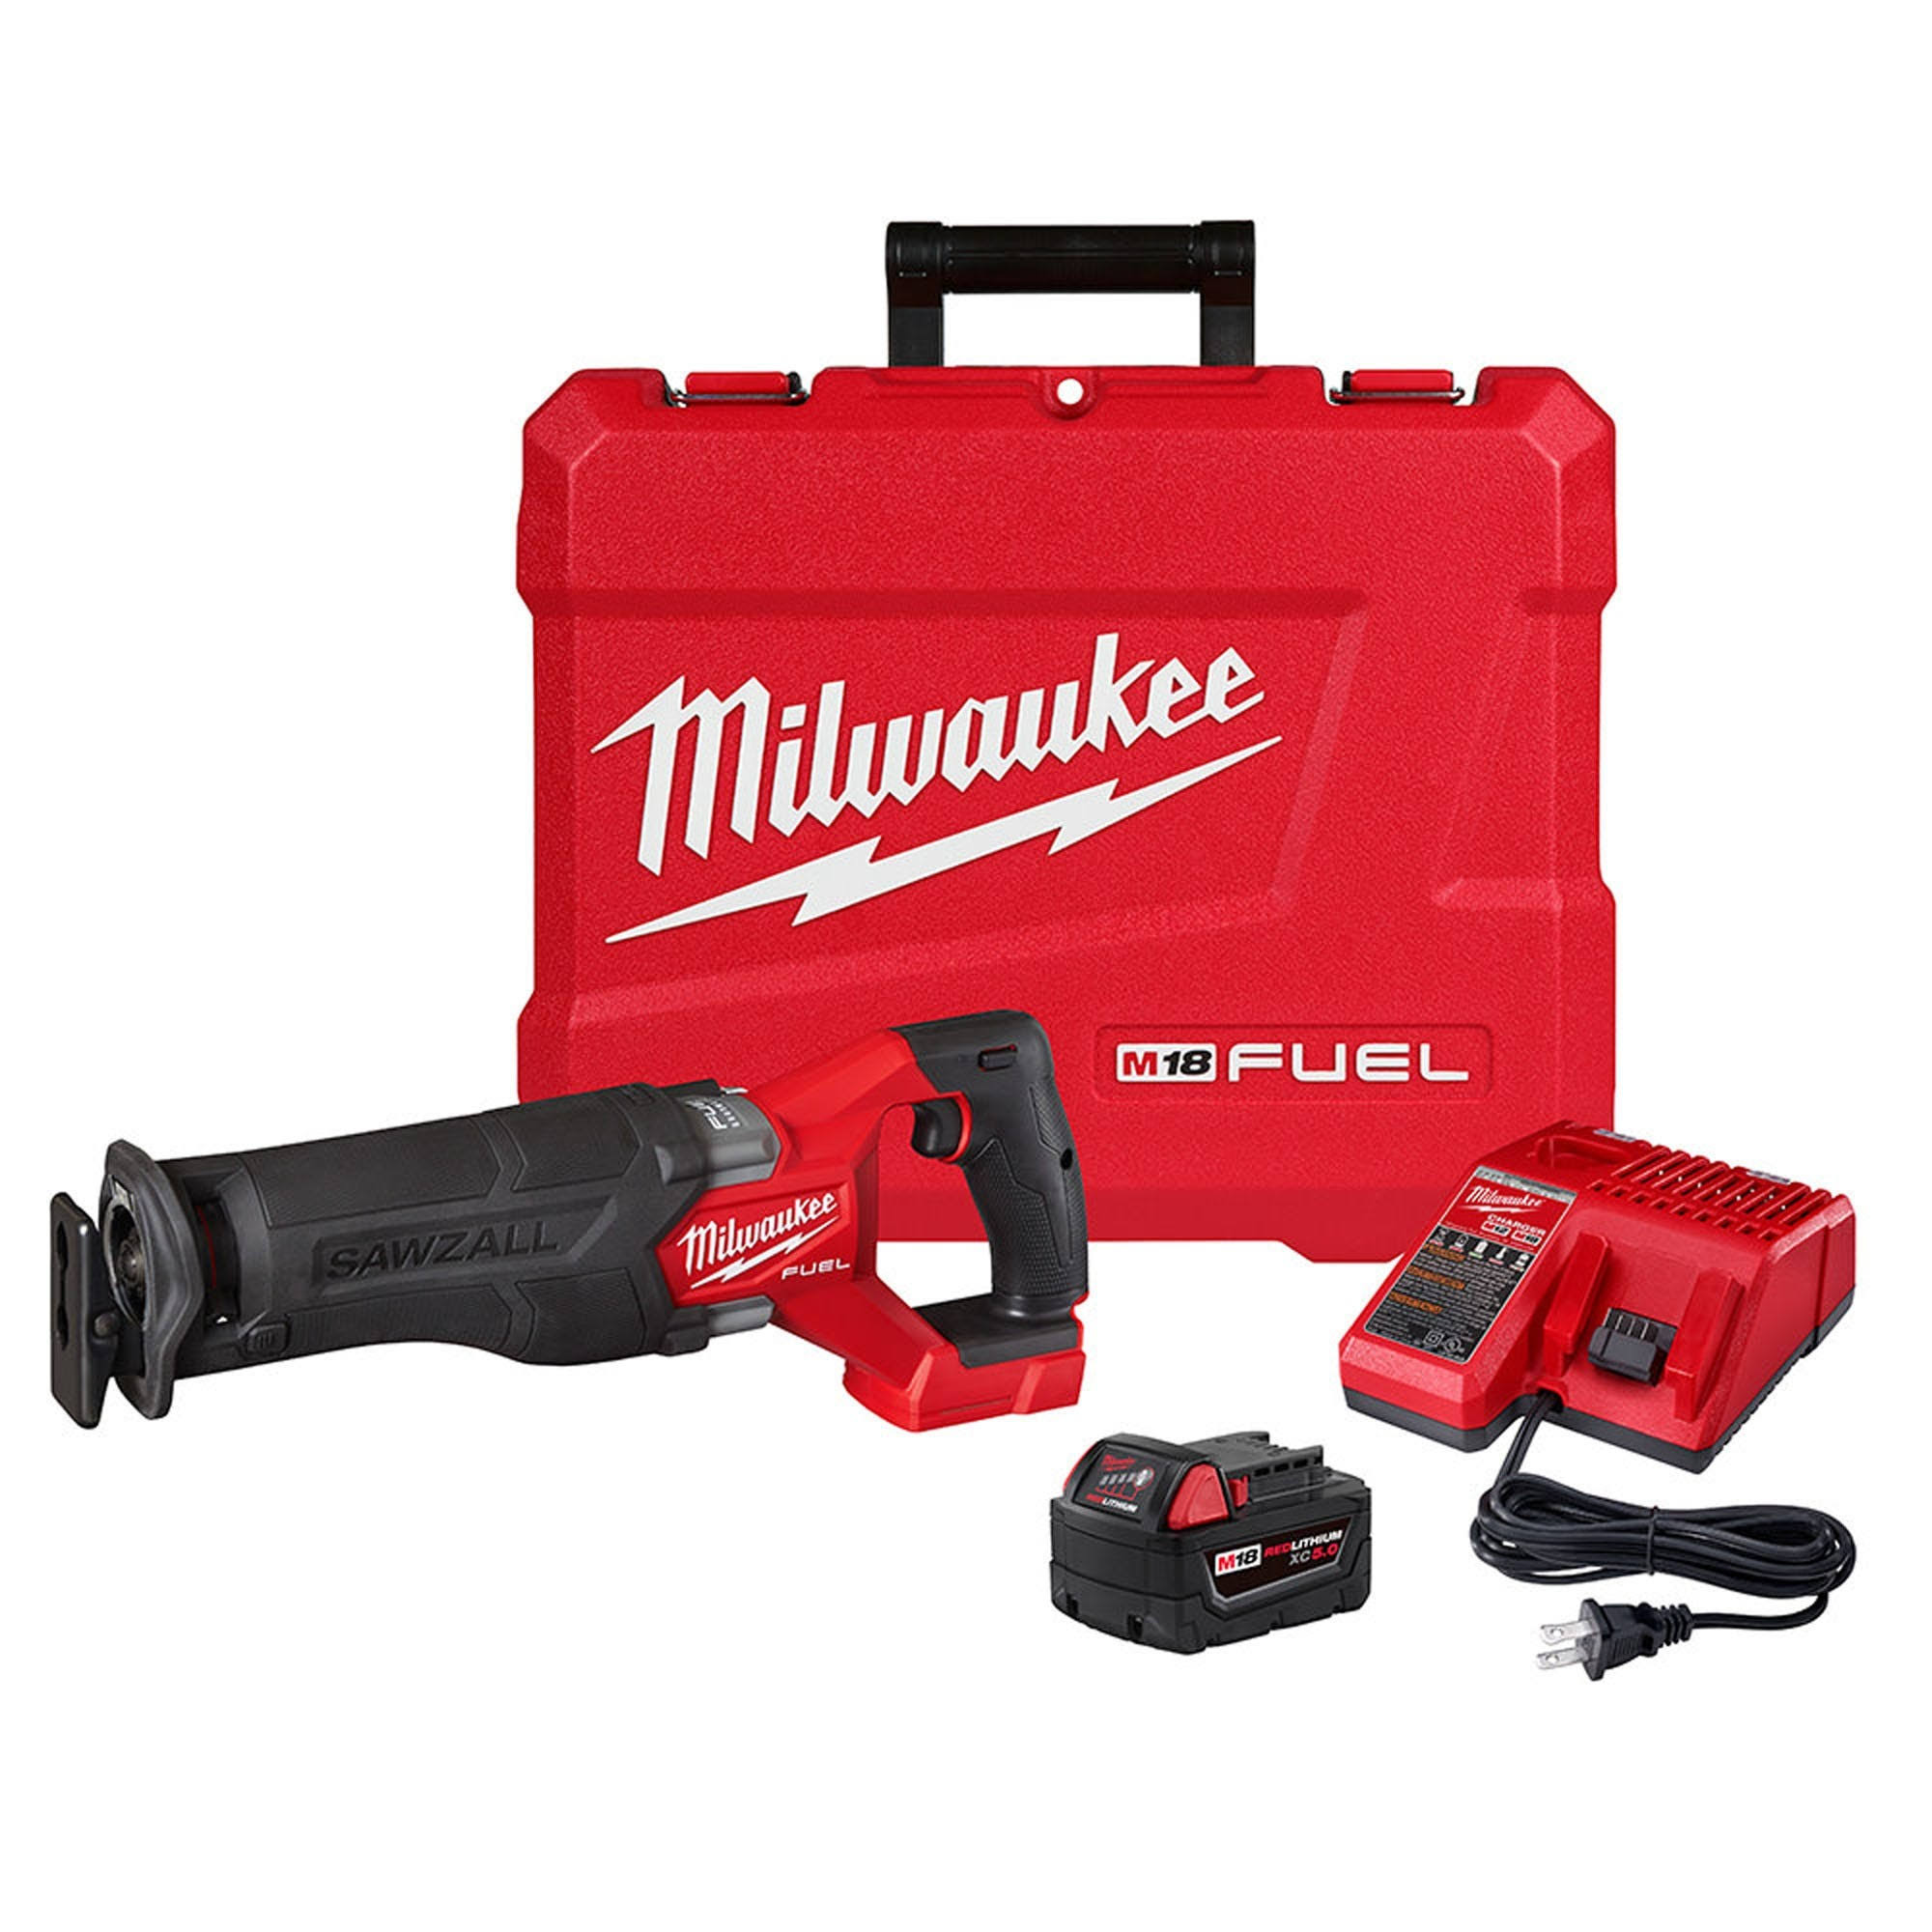 Milwaukee 2821-21 M18 Fuel SAWZALL Reciprocating Saw Kit